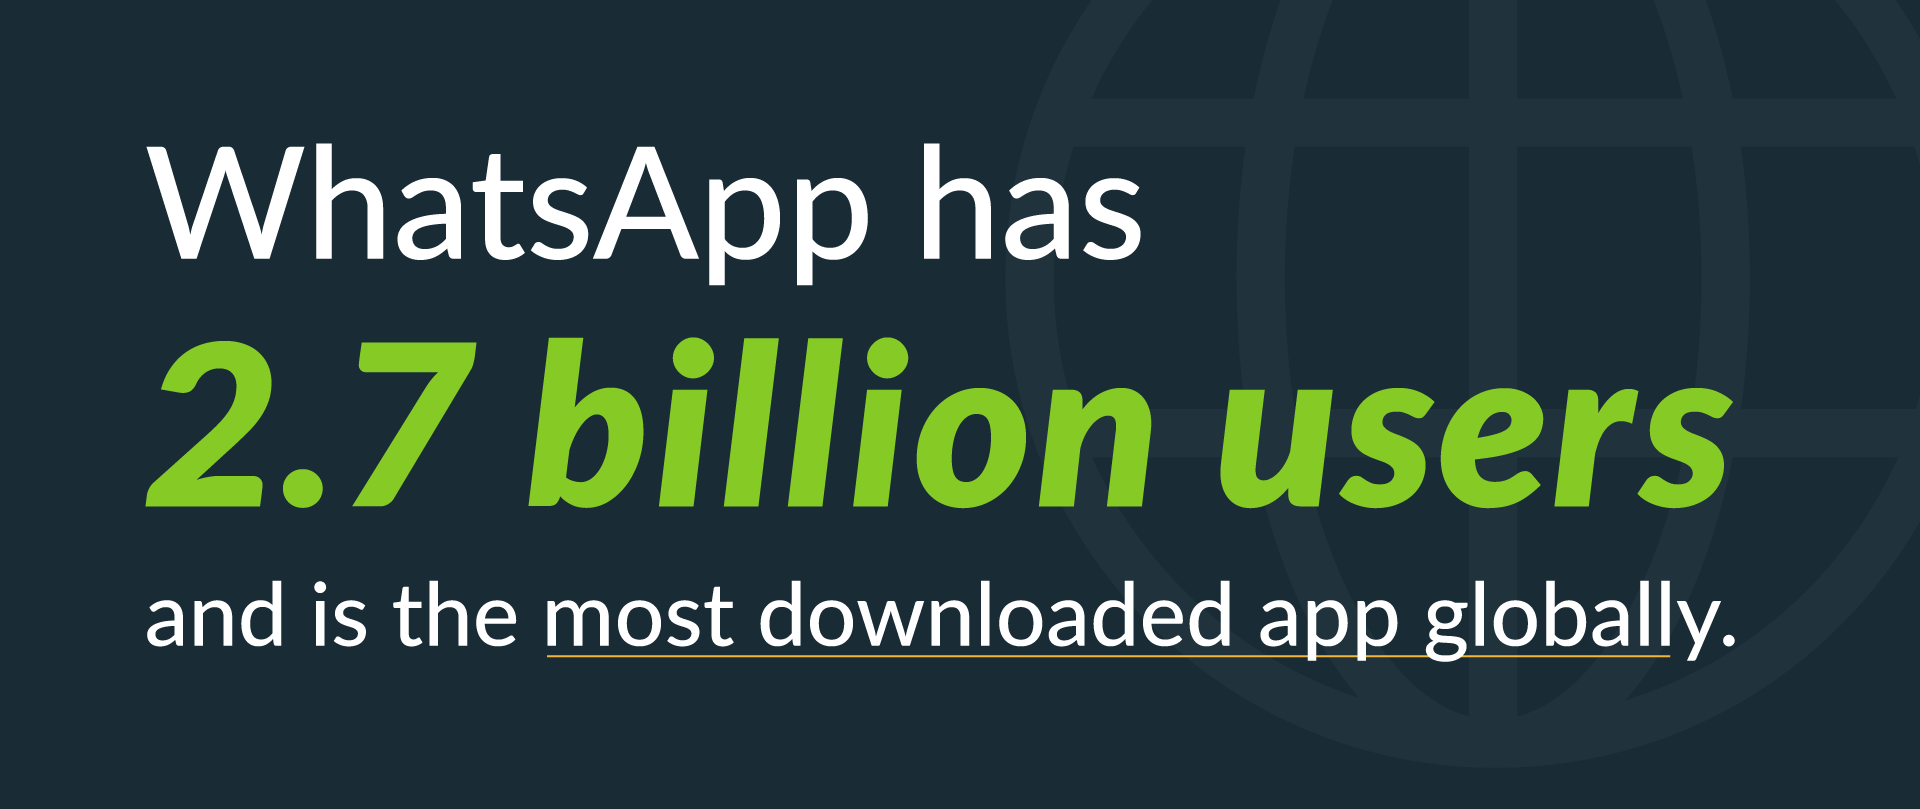 WhatsApp has 2.7 billion users